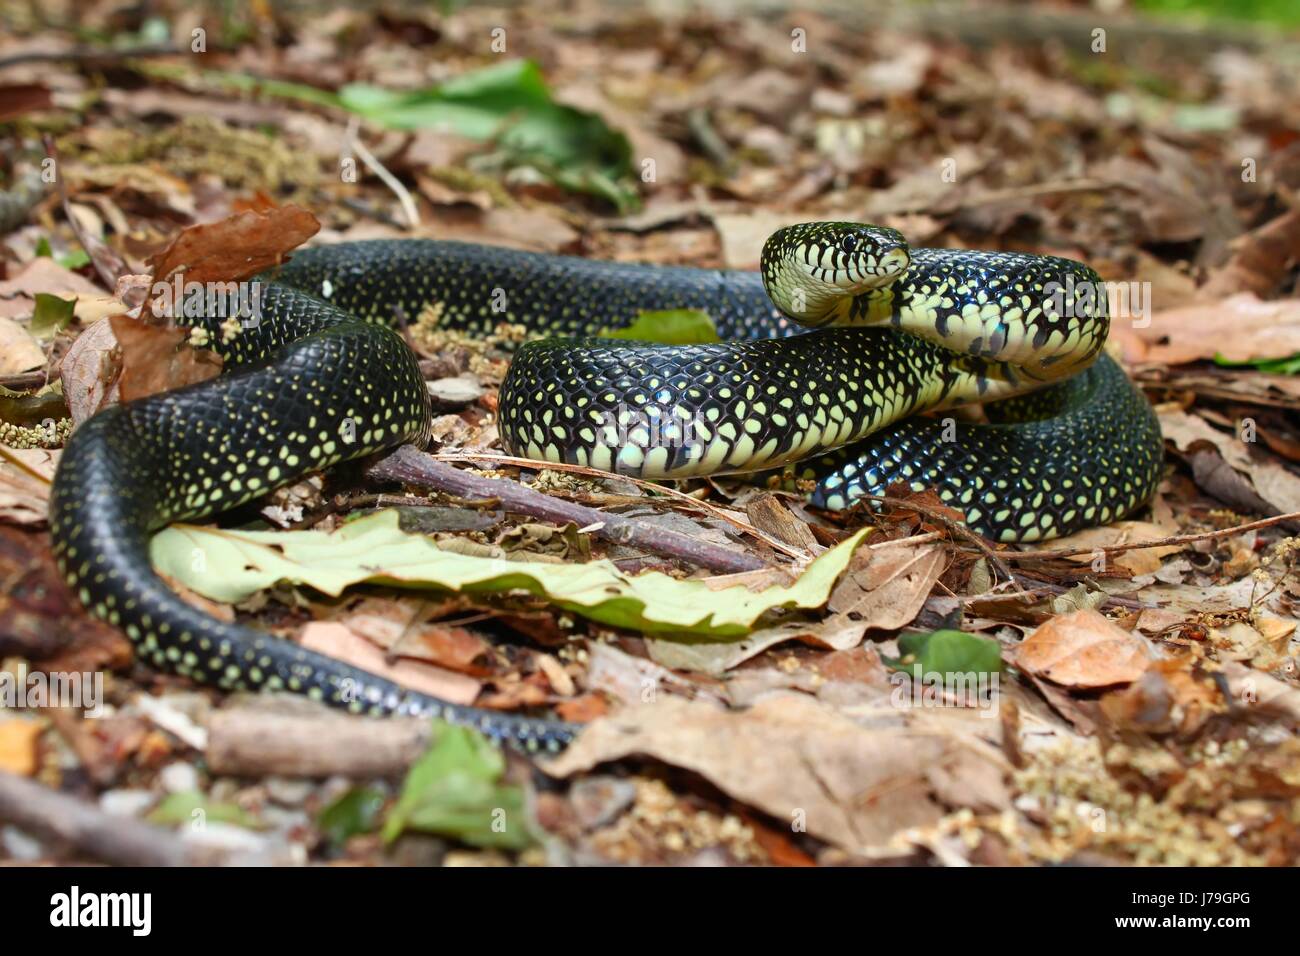 animal reptile black swarthy jetblack deep black snake emperor king herpetology Stock Photo